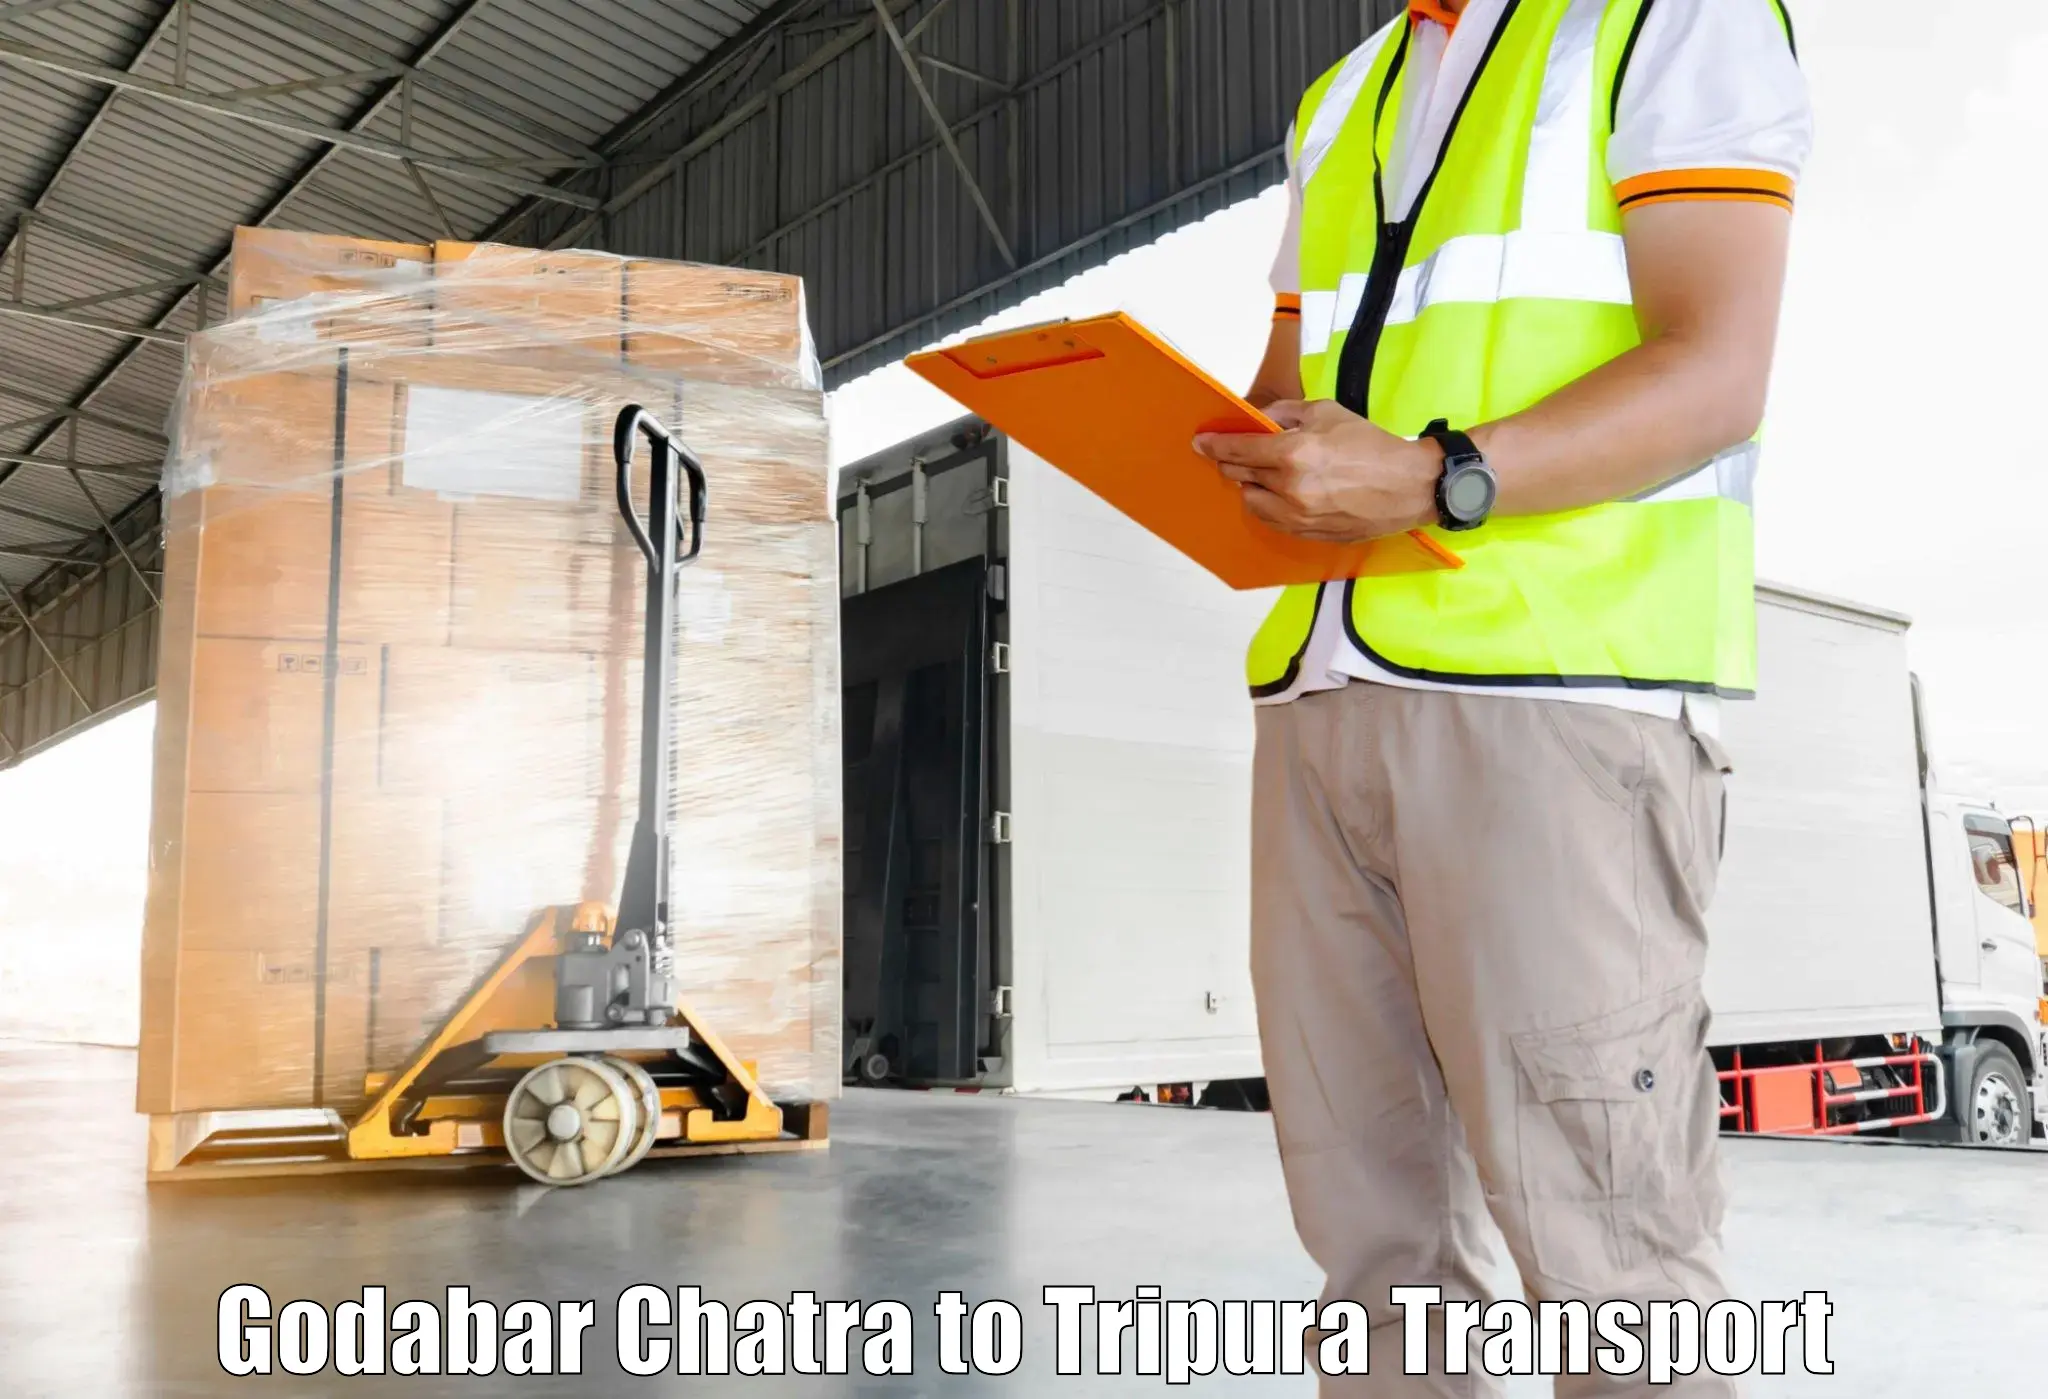 Cargo train transport services Godabar Chatra to South Tripura